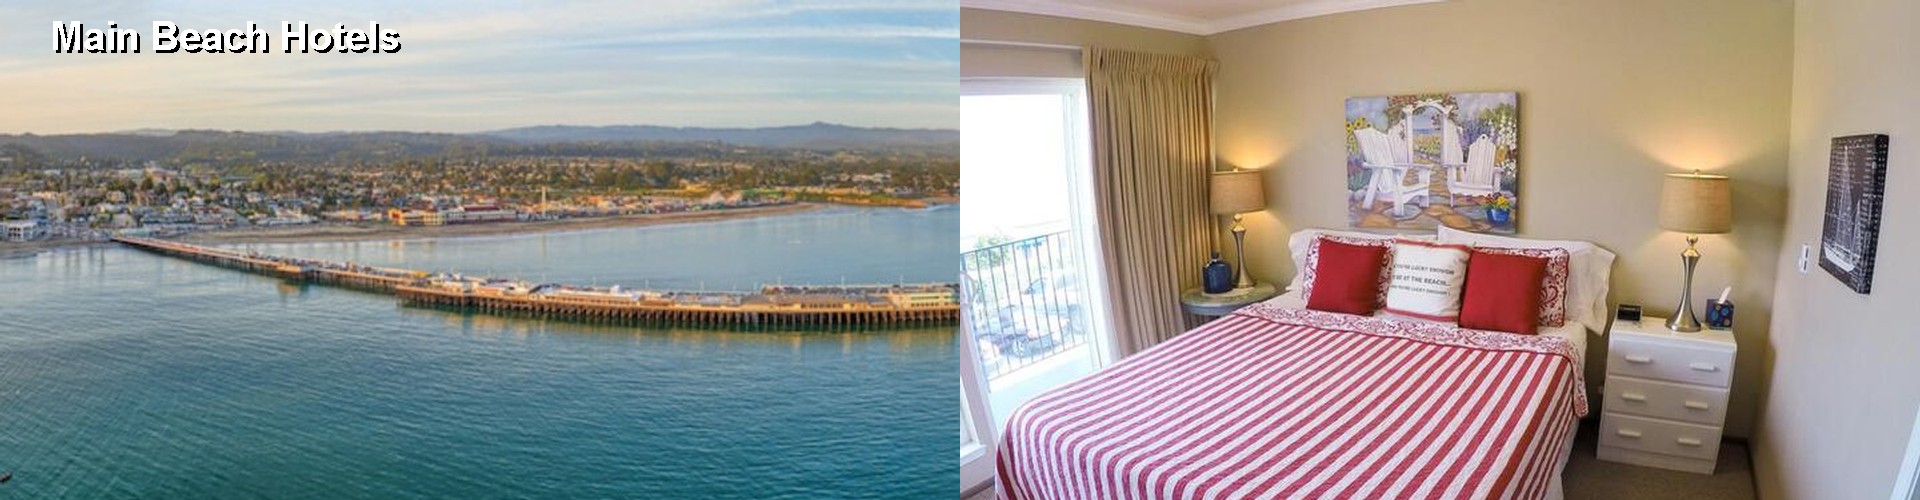 5 Best Hotels near Main Beach